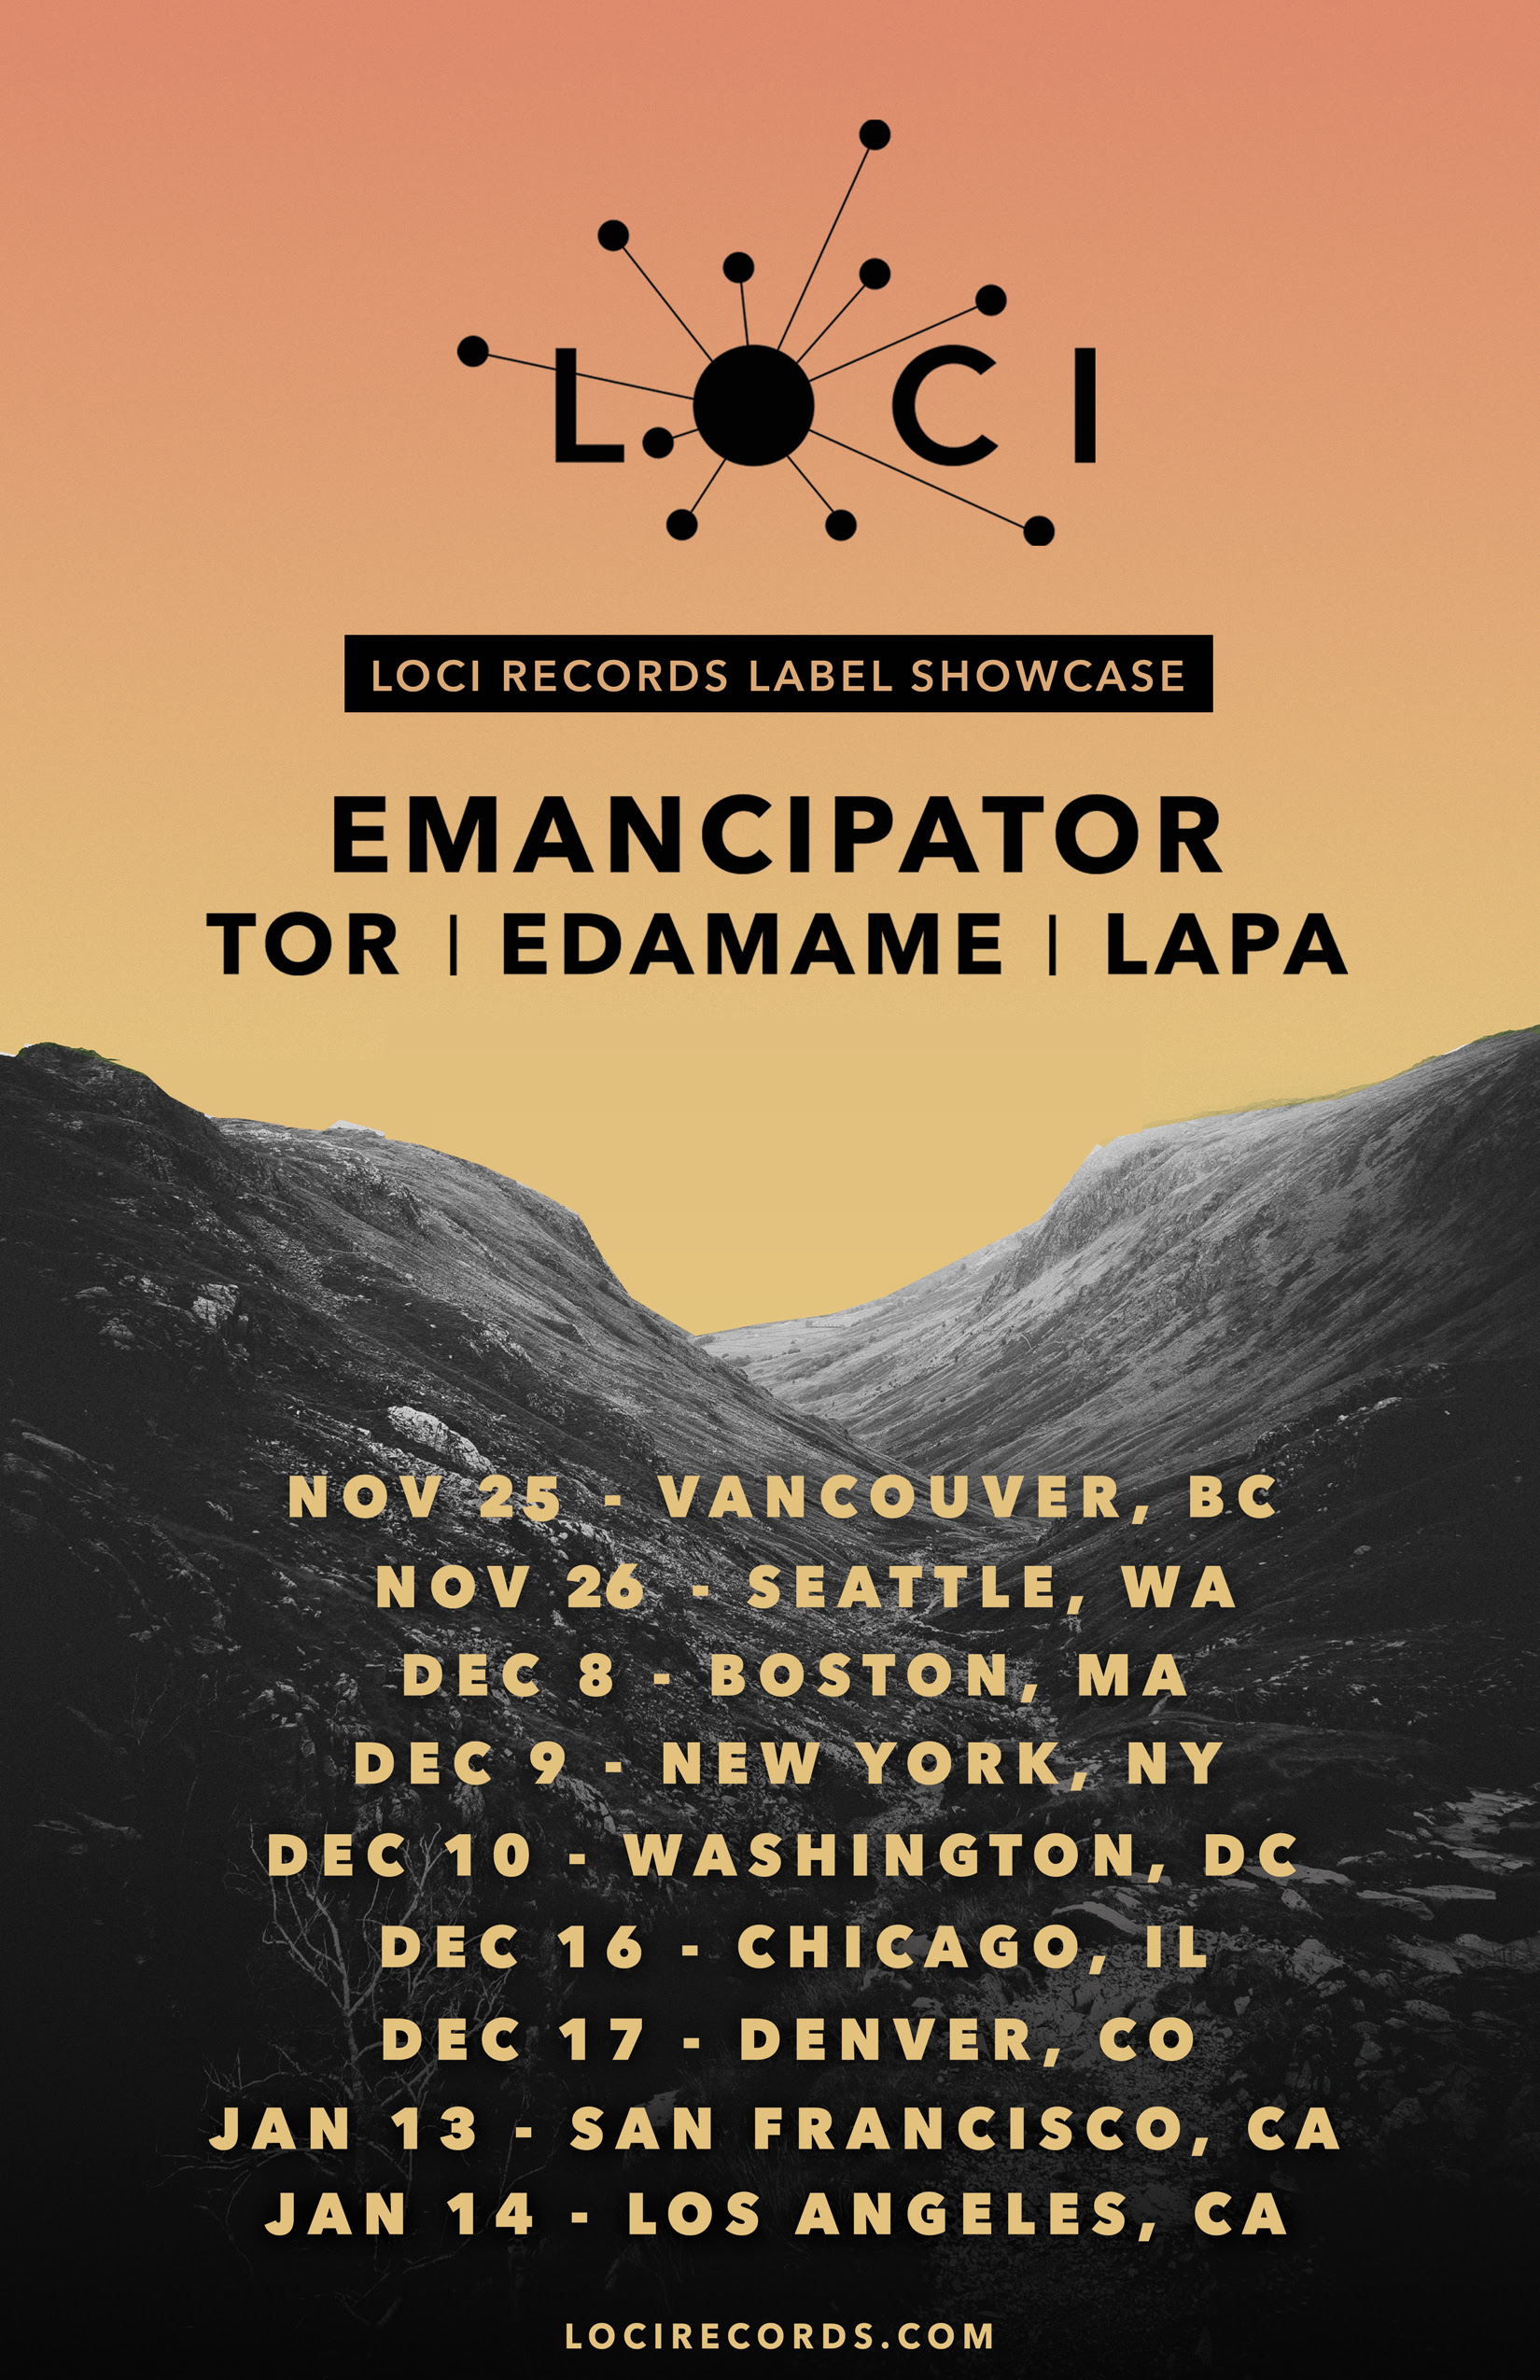 Emancipator and Loci Records Tour. Photo provided.